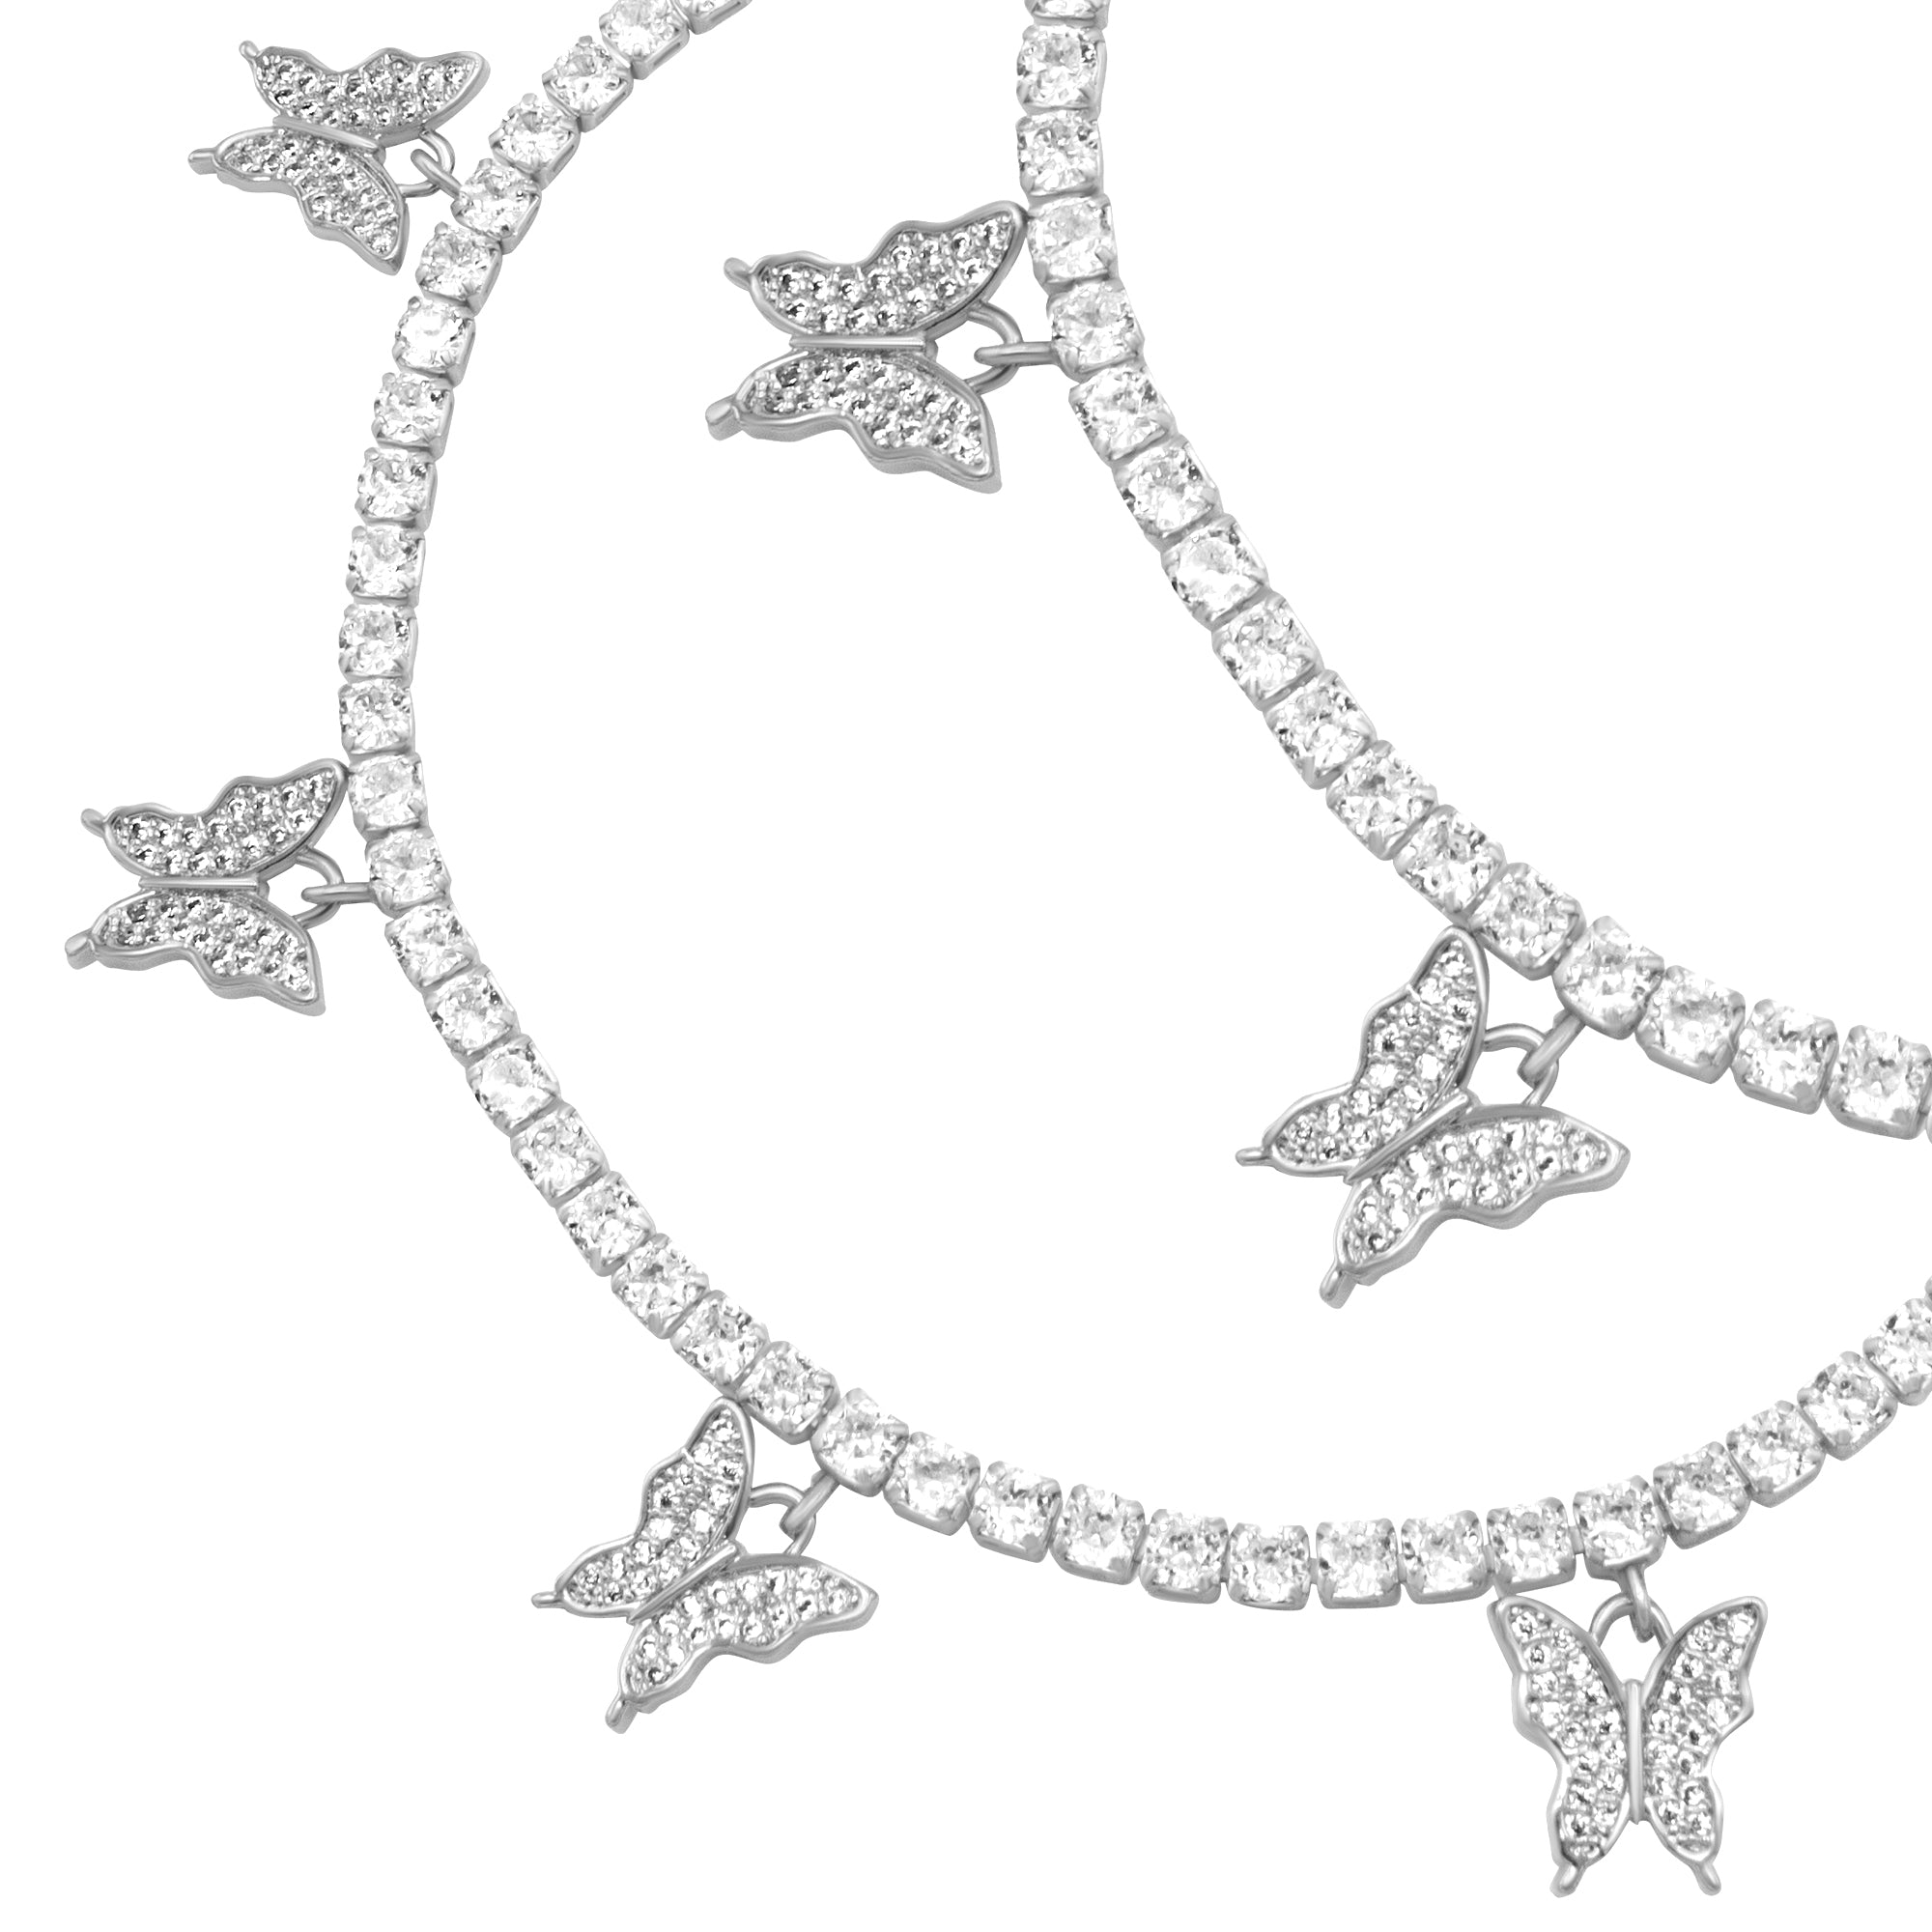 Stellar Elegance - 7 Healing Stones Bracelet